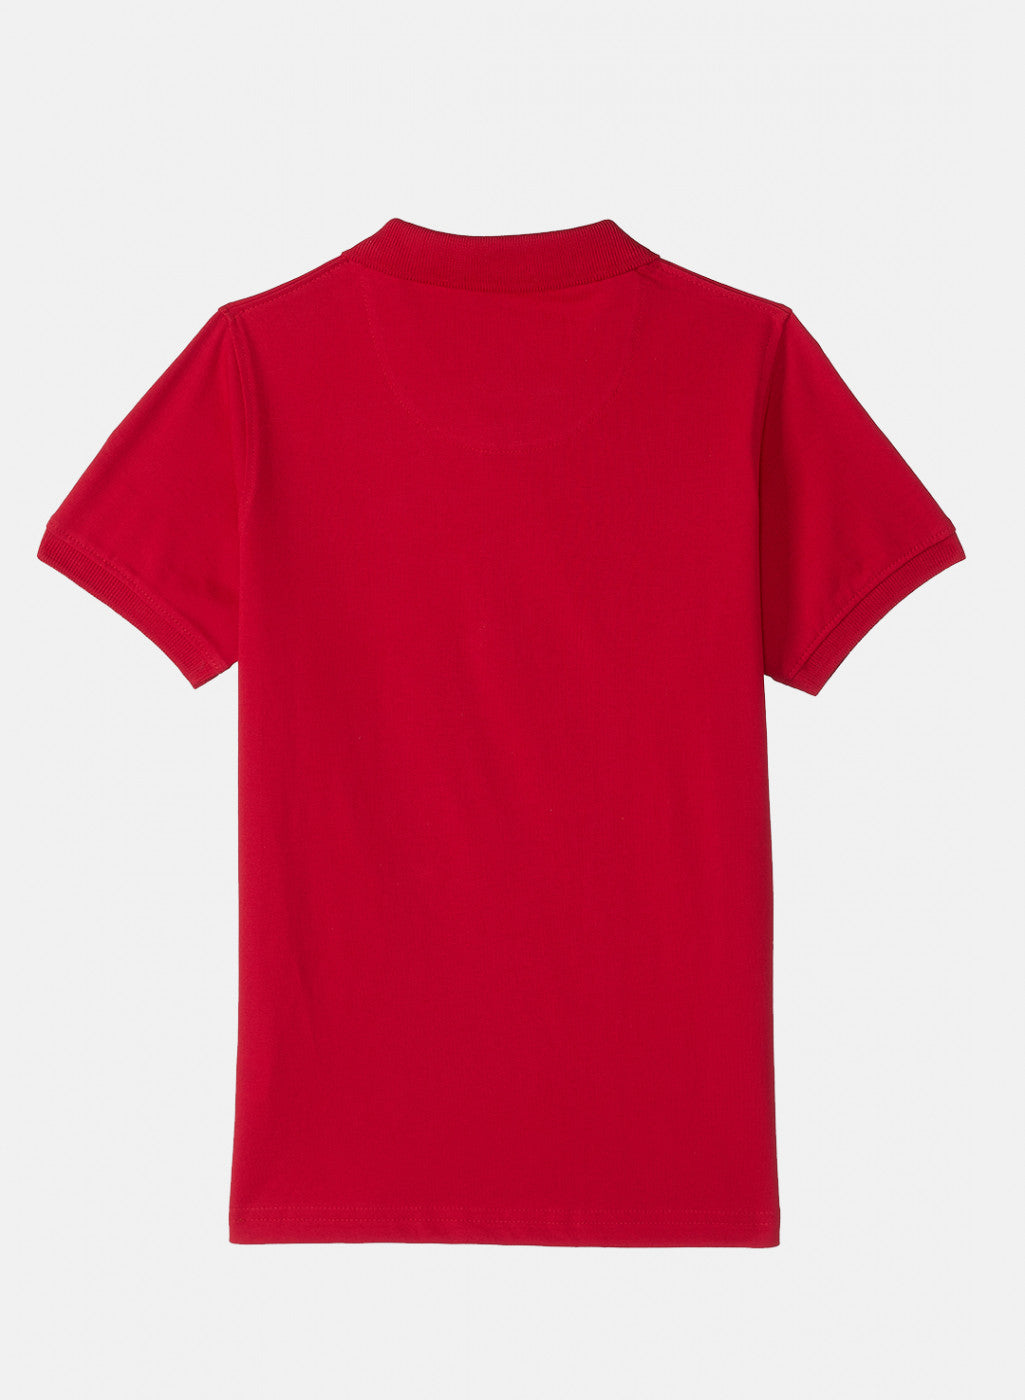 Boys Red Plain T-Shirt